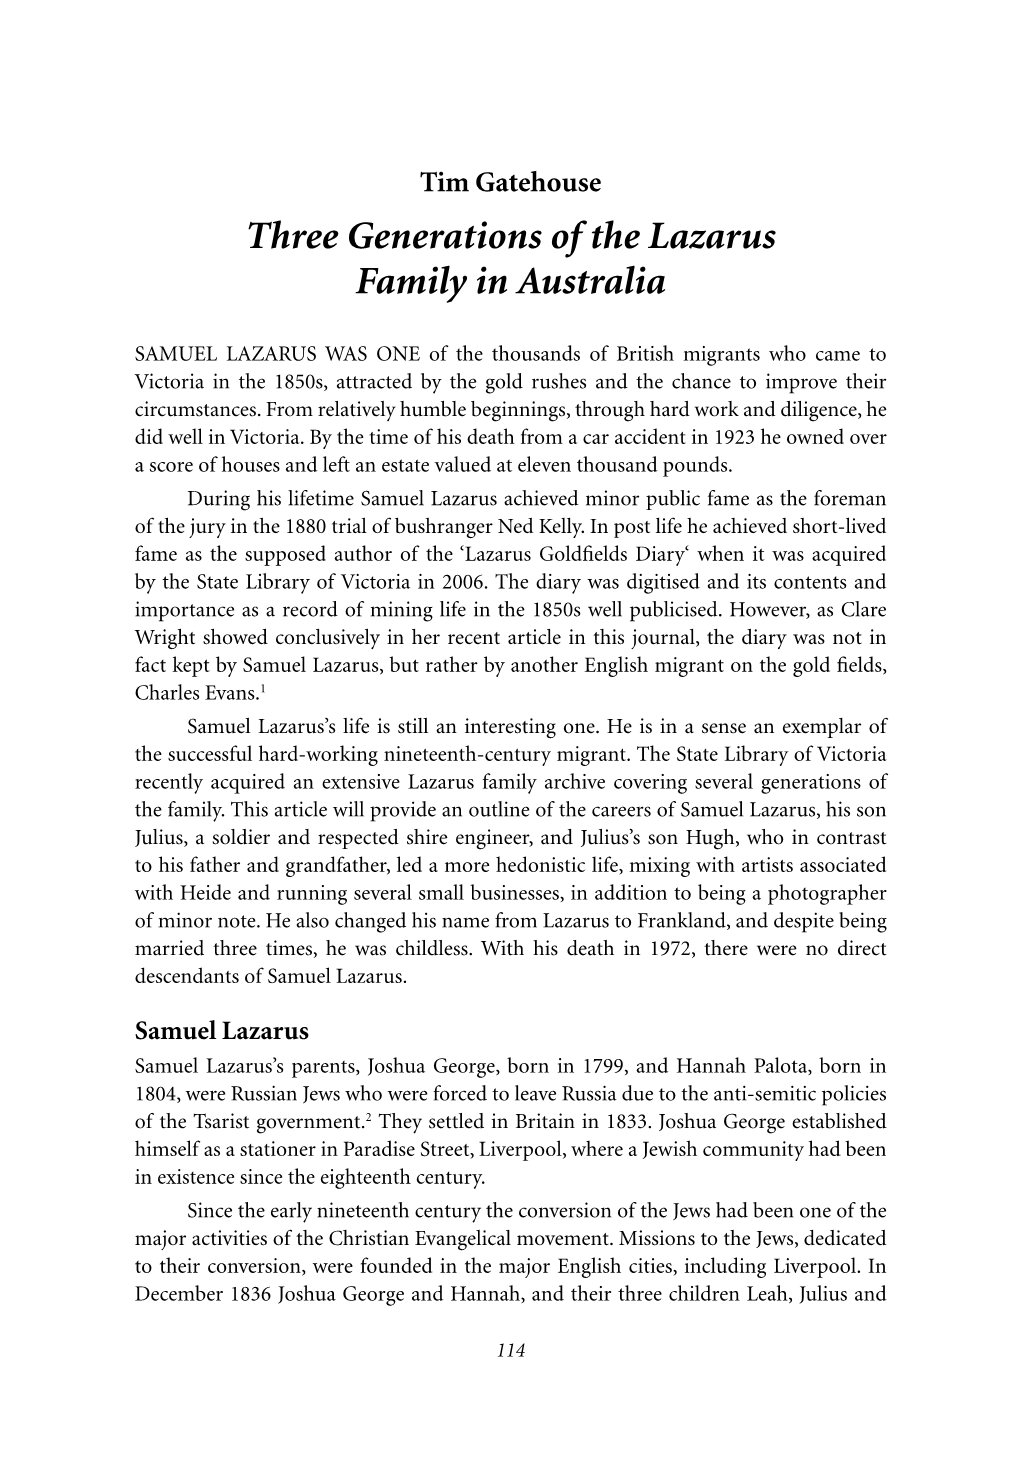 Tim Gatehouse – Three Generations of the Lazarus Family in Australia